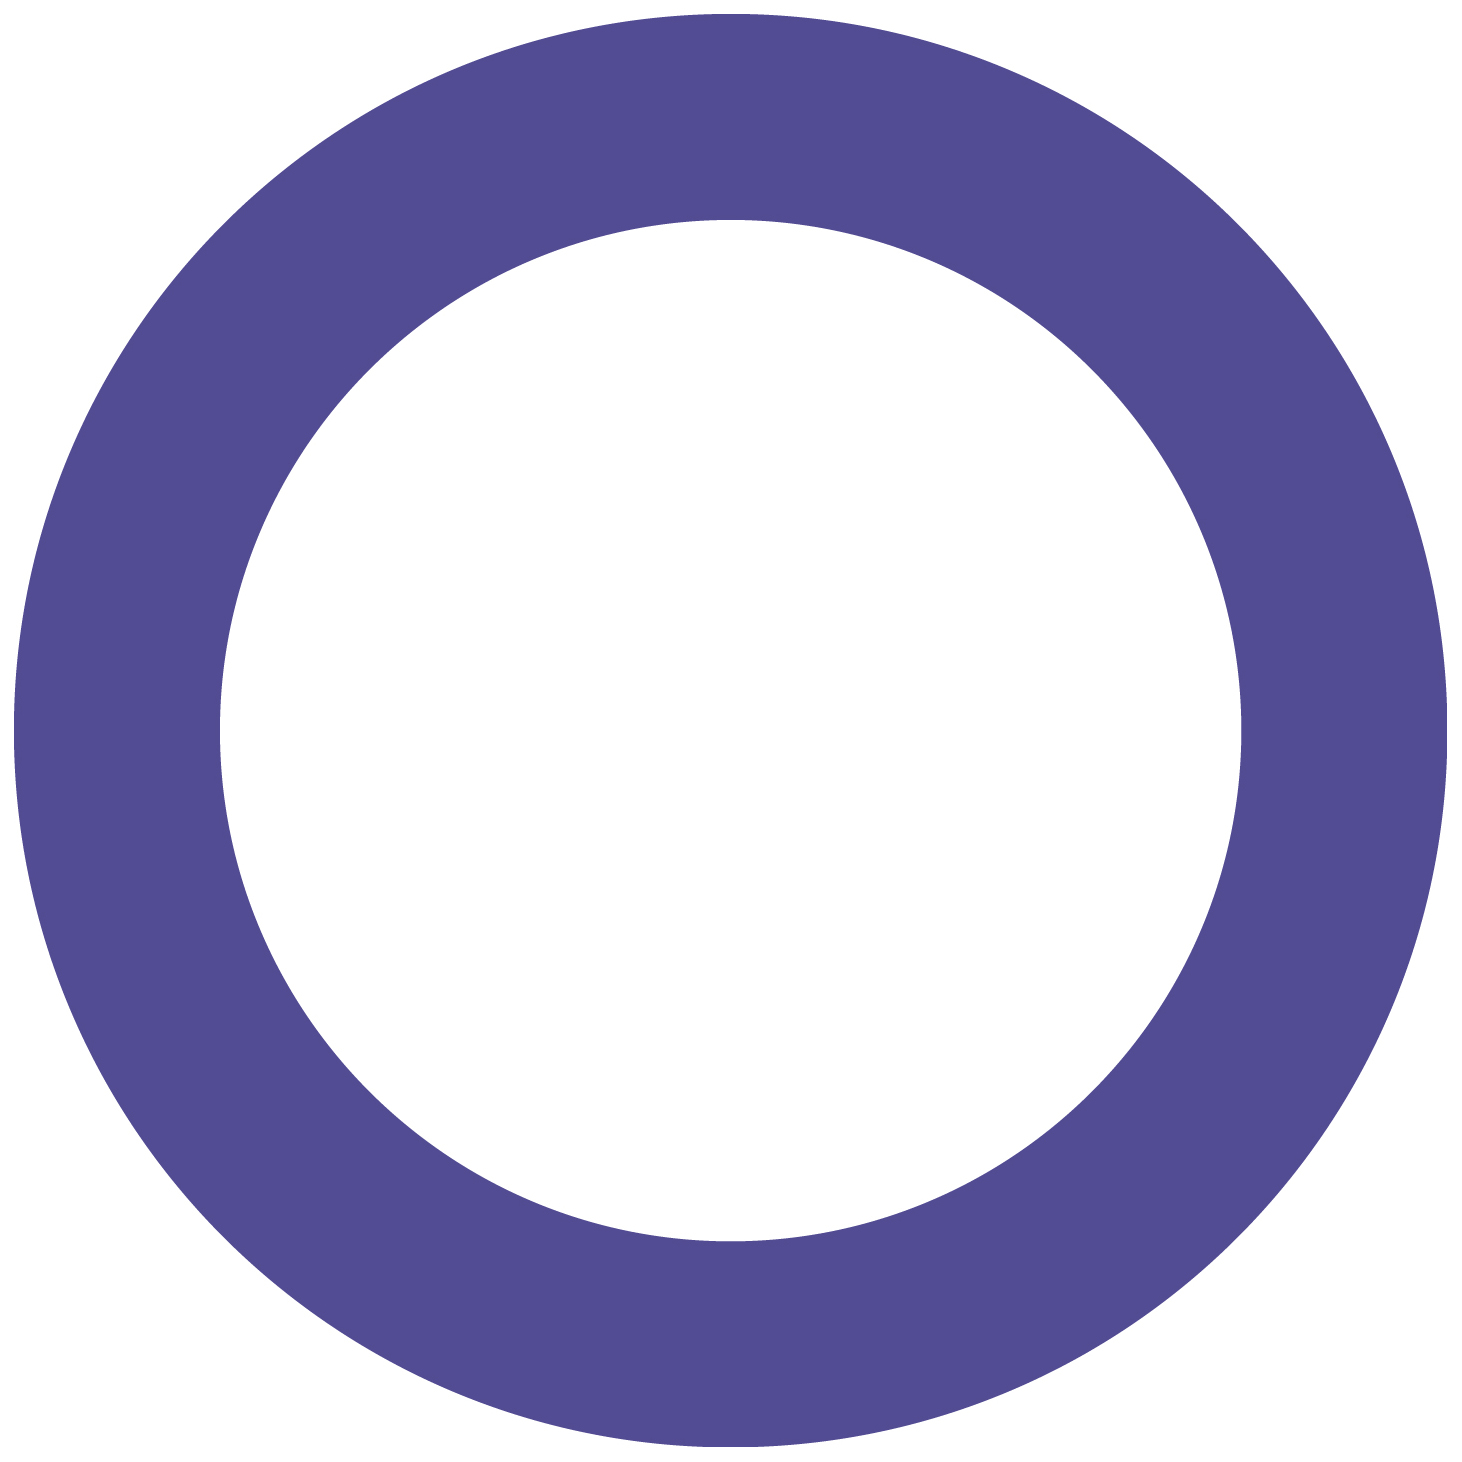 LinkedIn Circle Logo